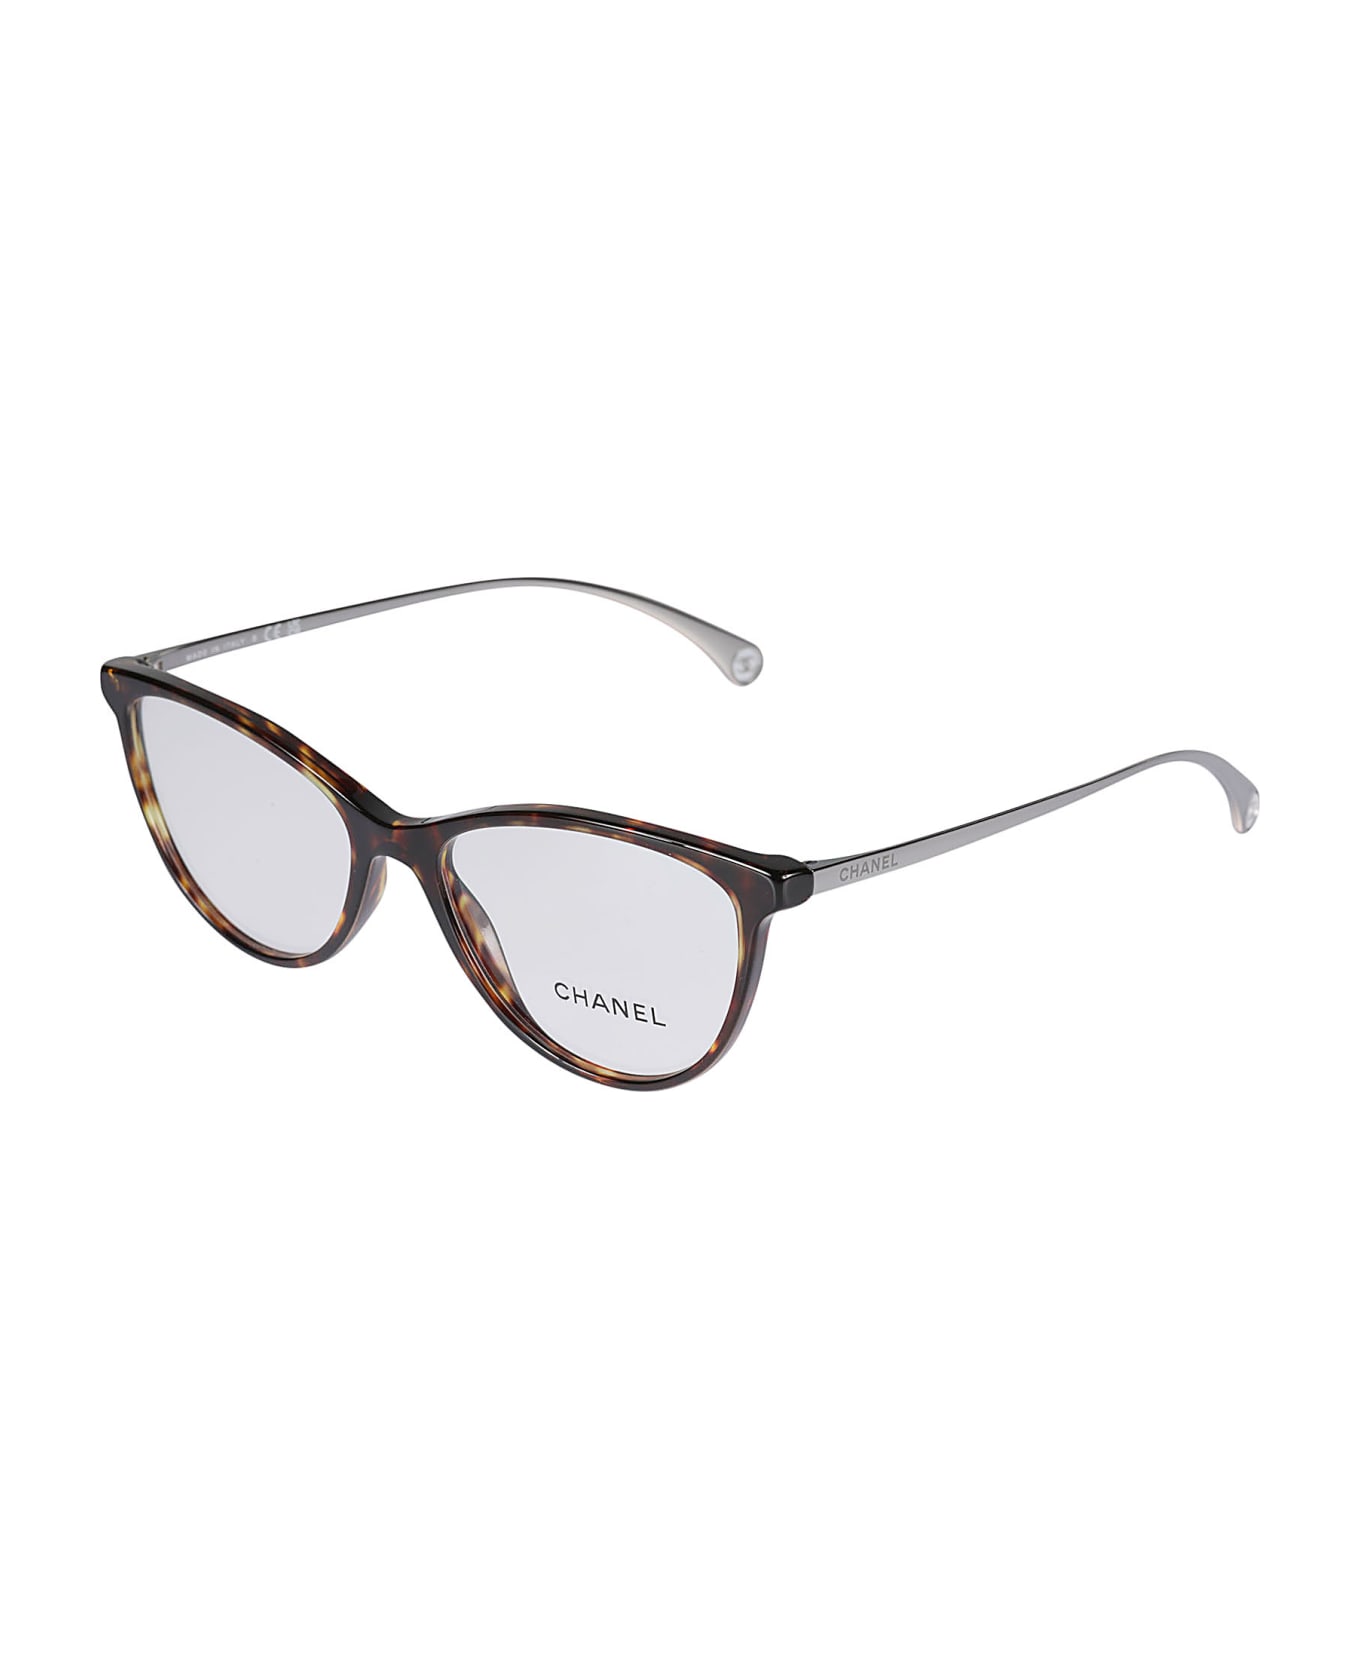 Chanel Cat Cross Eye Glasses - Nero